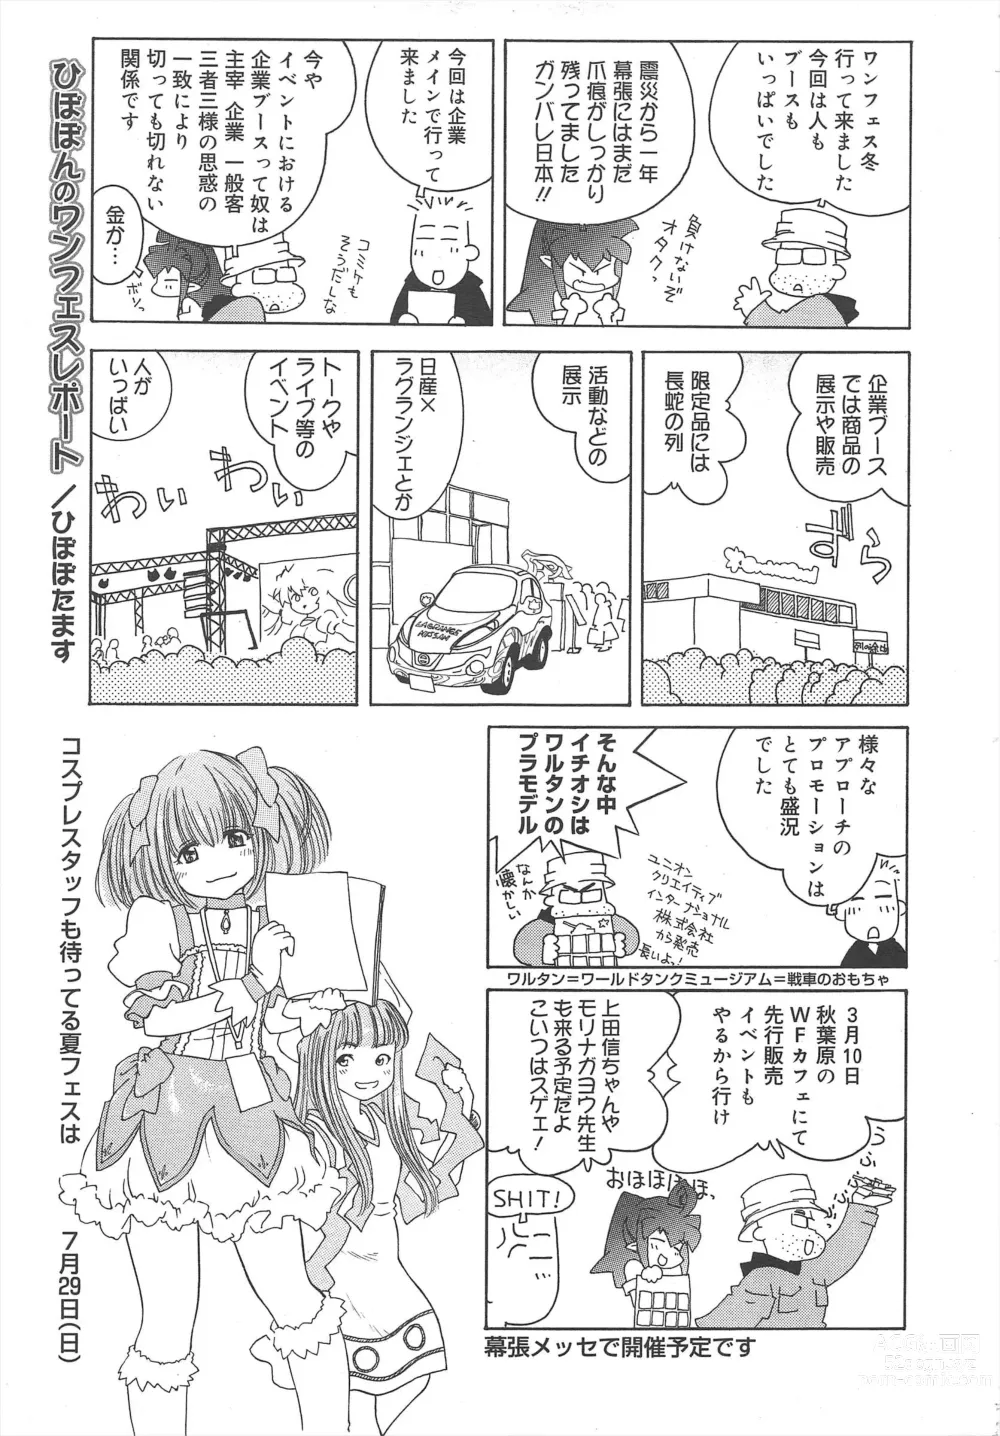 Page 325 of manga COMIC Megamilk 2012-04 Vol.22